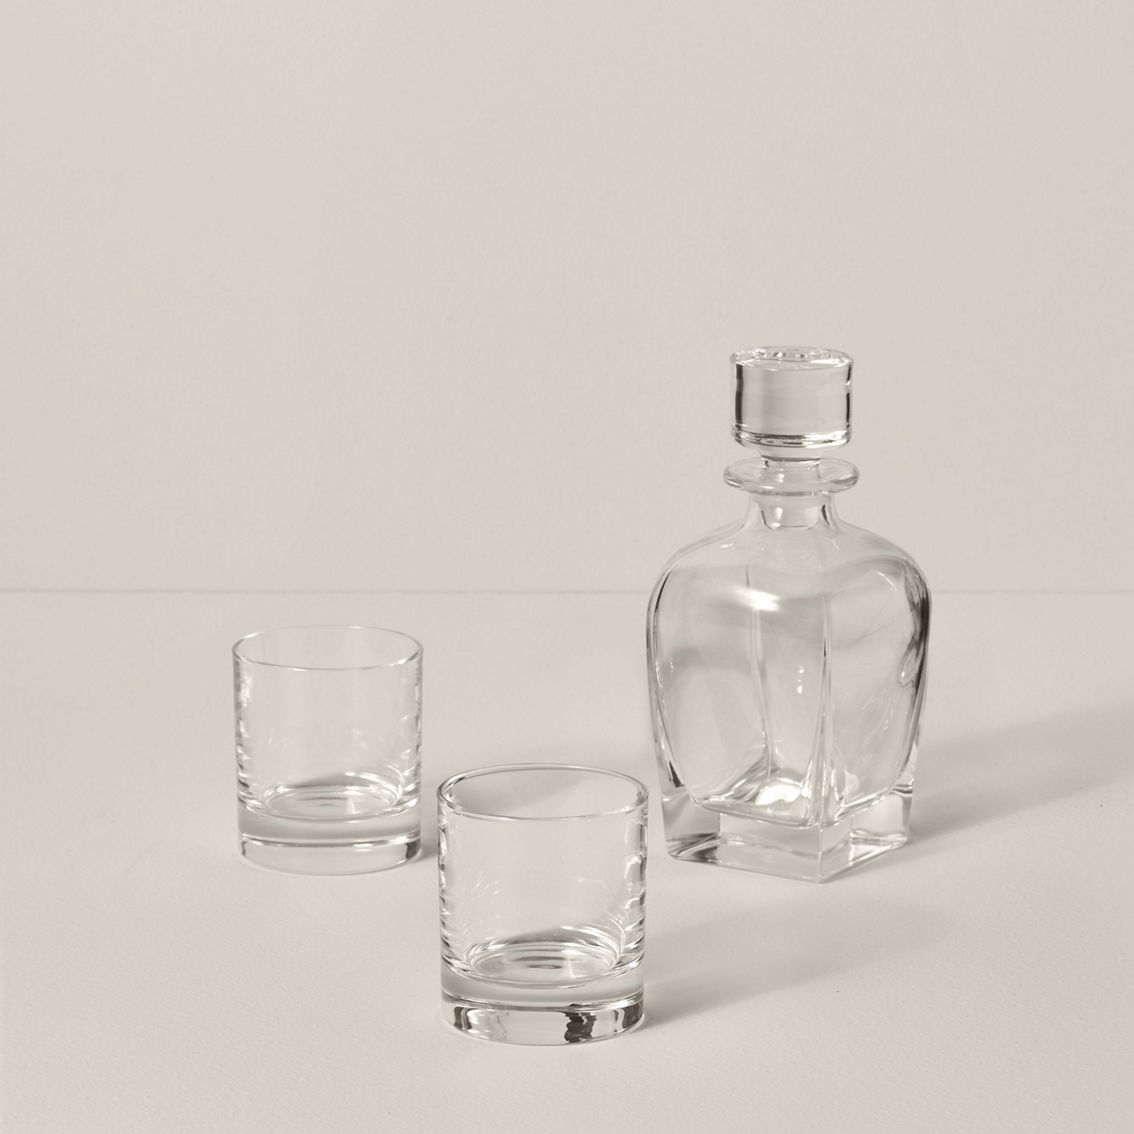 Lenox Tuscany Classics 3 pc. Whiskey Decanter and Glass Set - Image 3 of 3